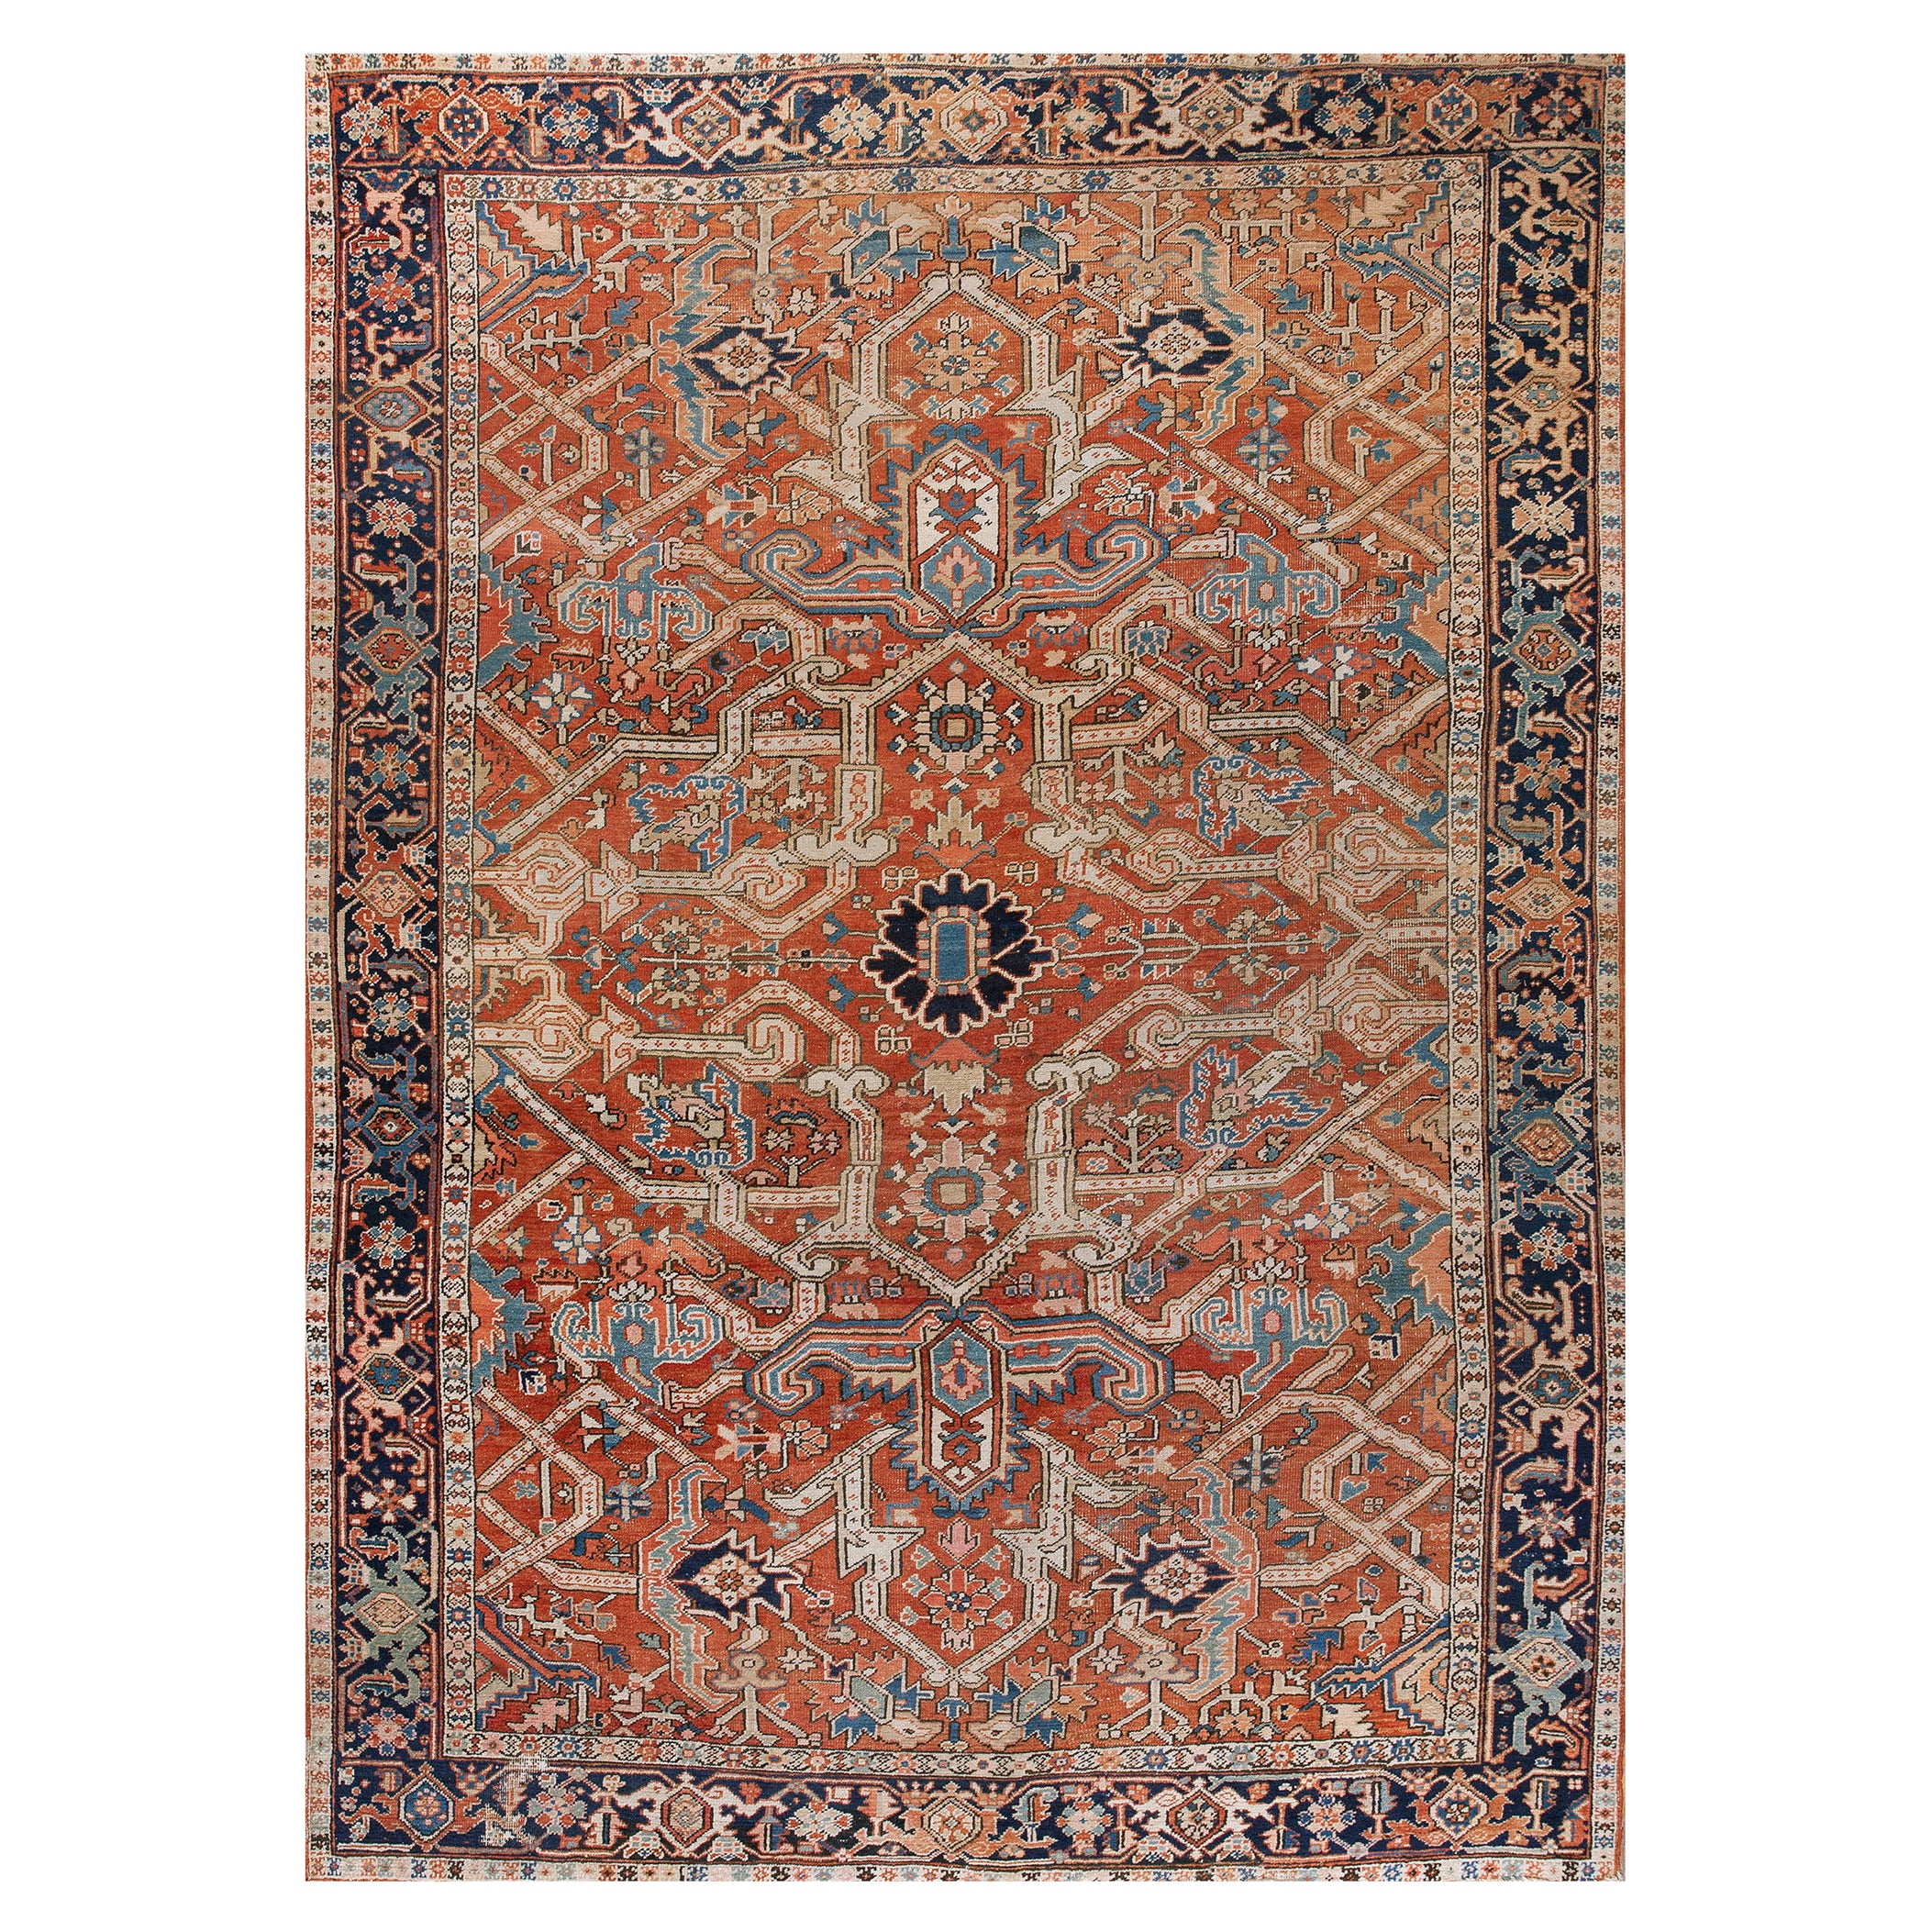 Late 19th Century N.W. Persian Heriz Carpet ( 8'3'' x 11'6'' - 250 x 350 cm ) For Sale